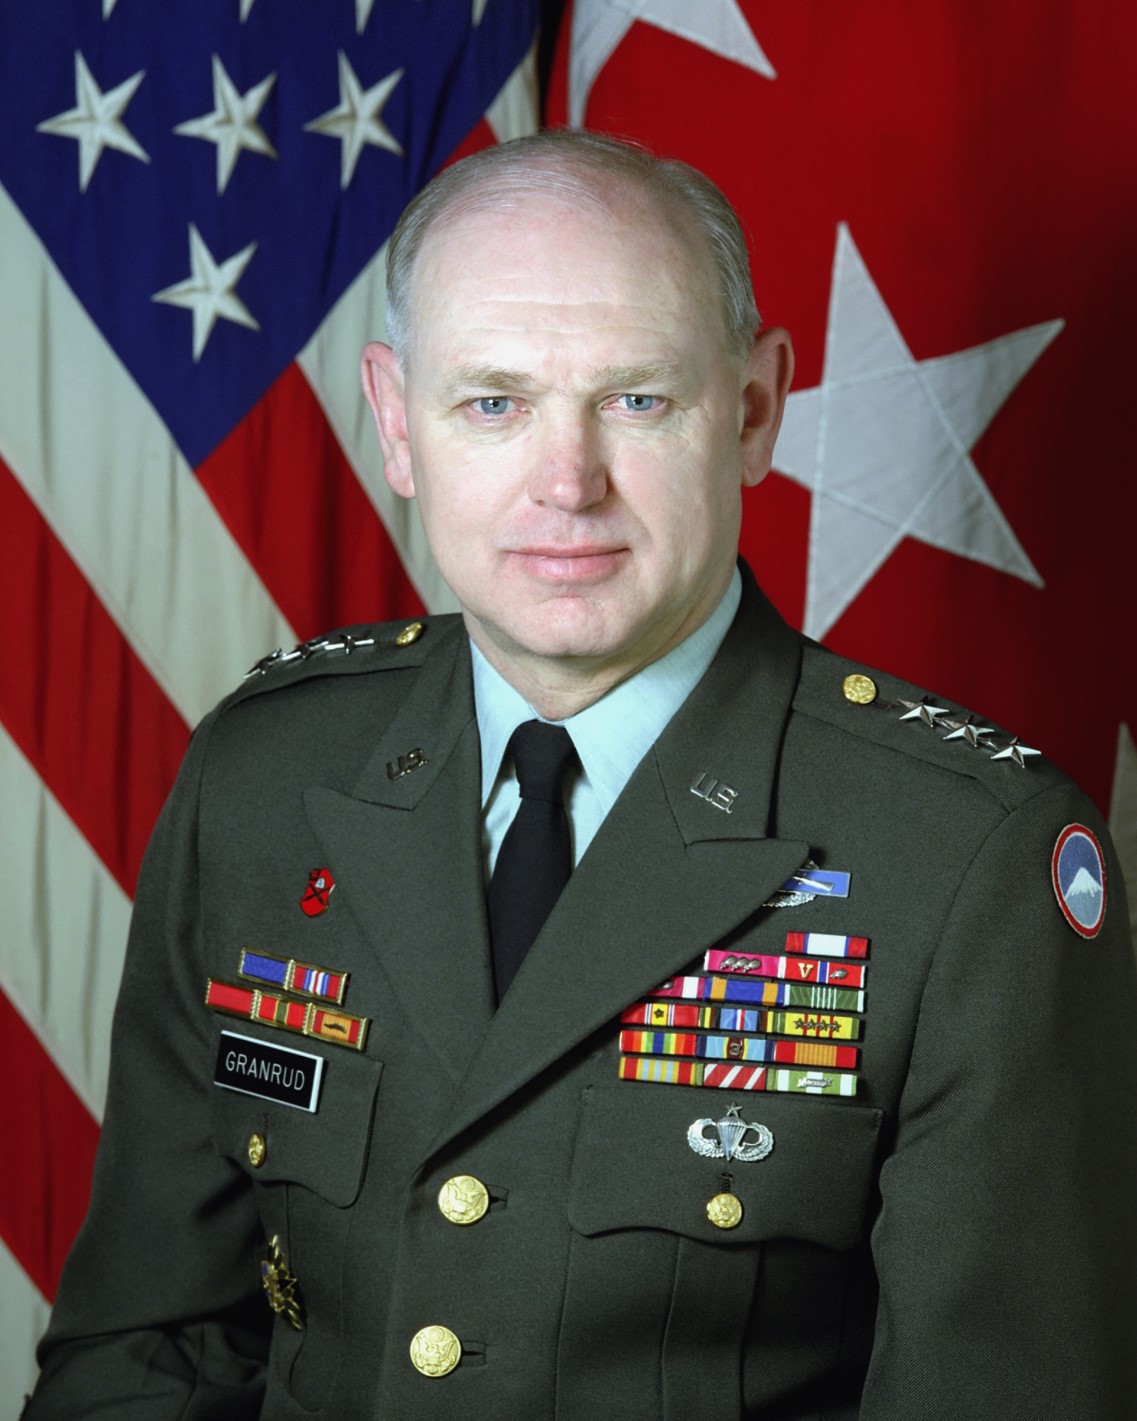 Lieutenant General (RET) Jerome H. Granrud